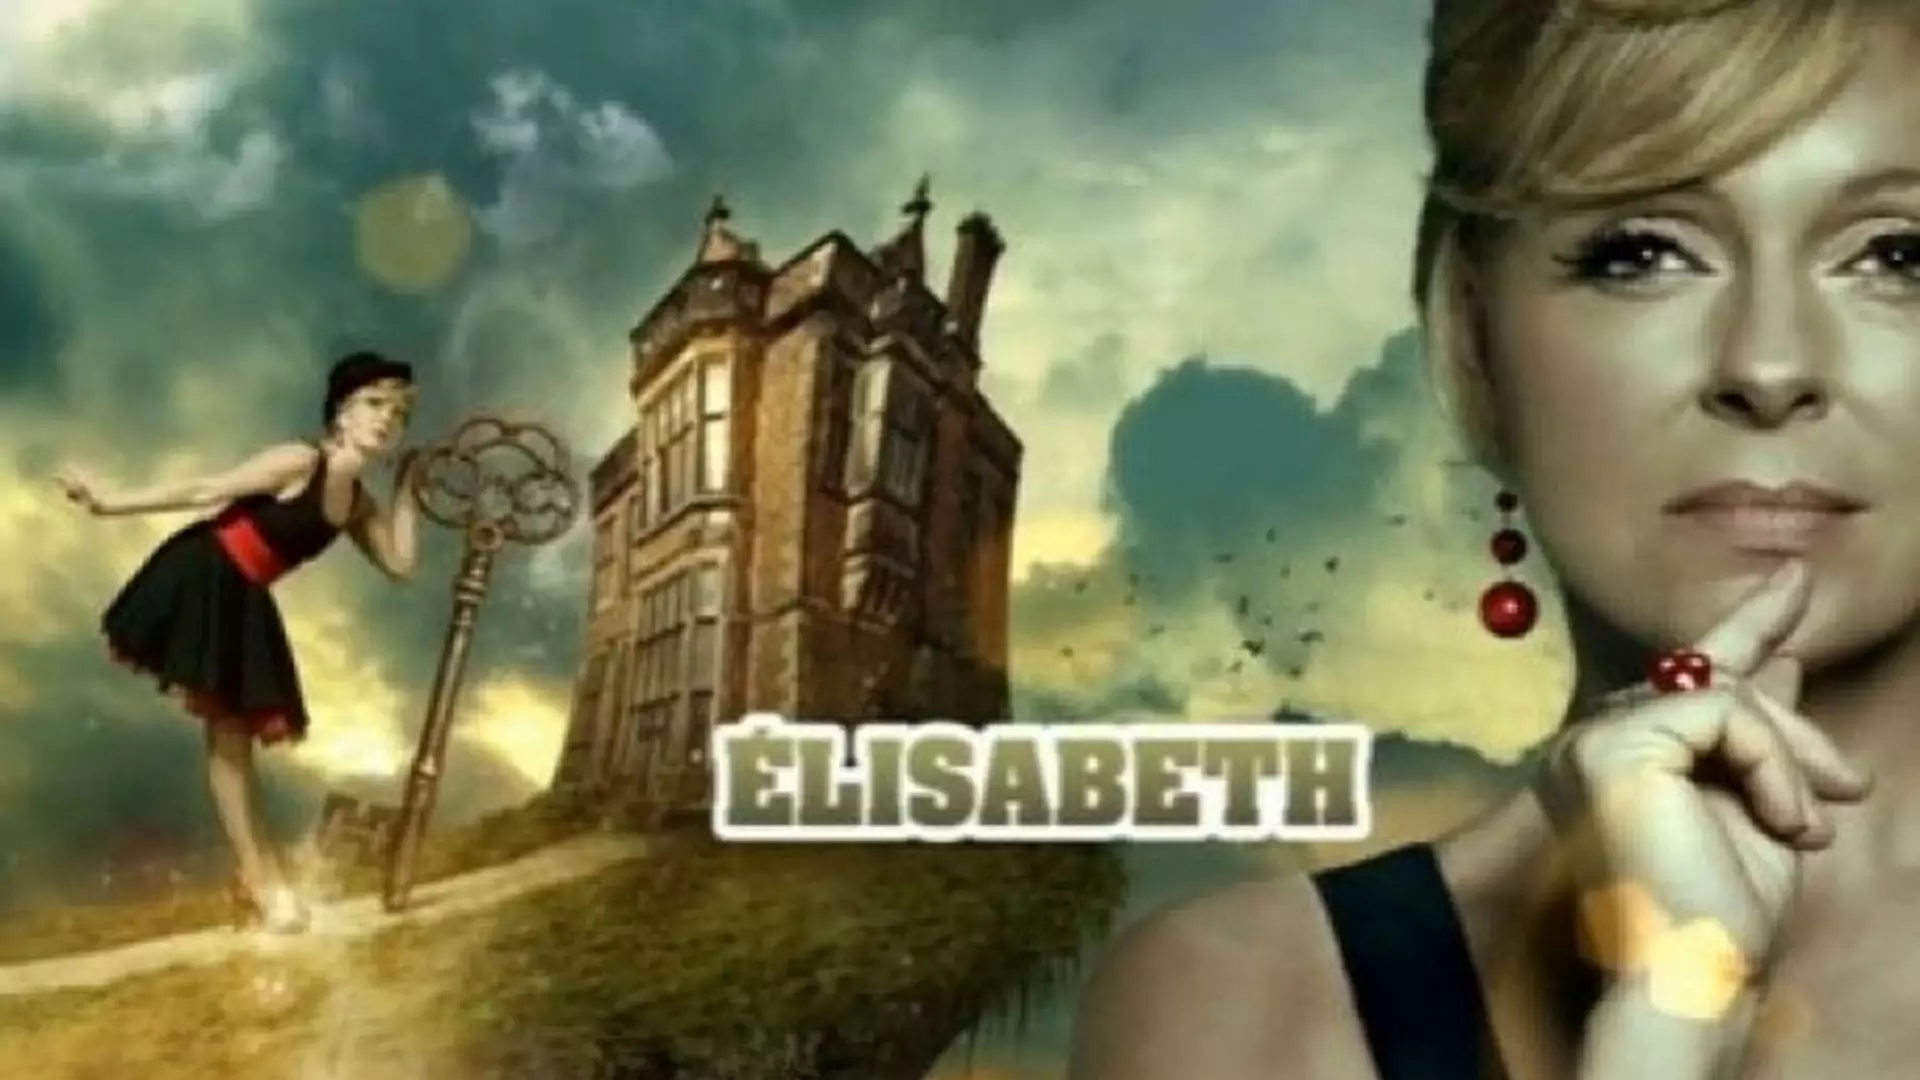 Elisabeth (Secret Story 3) - Albumy fanów